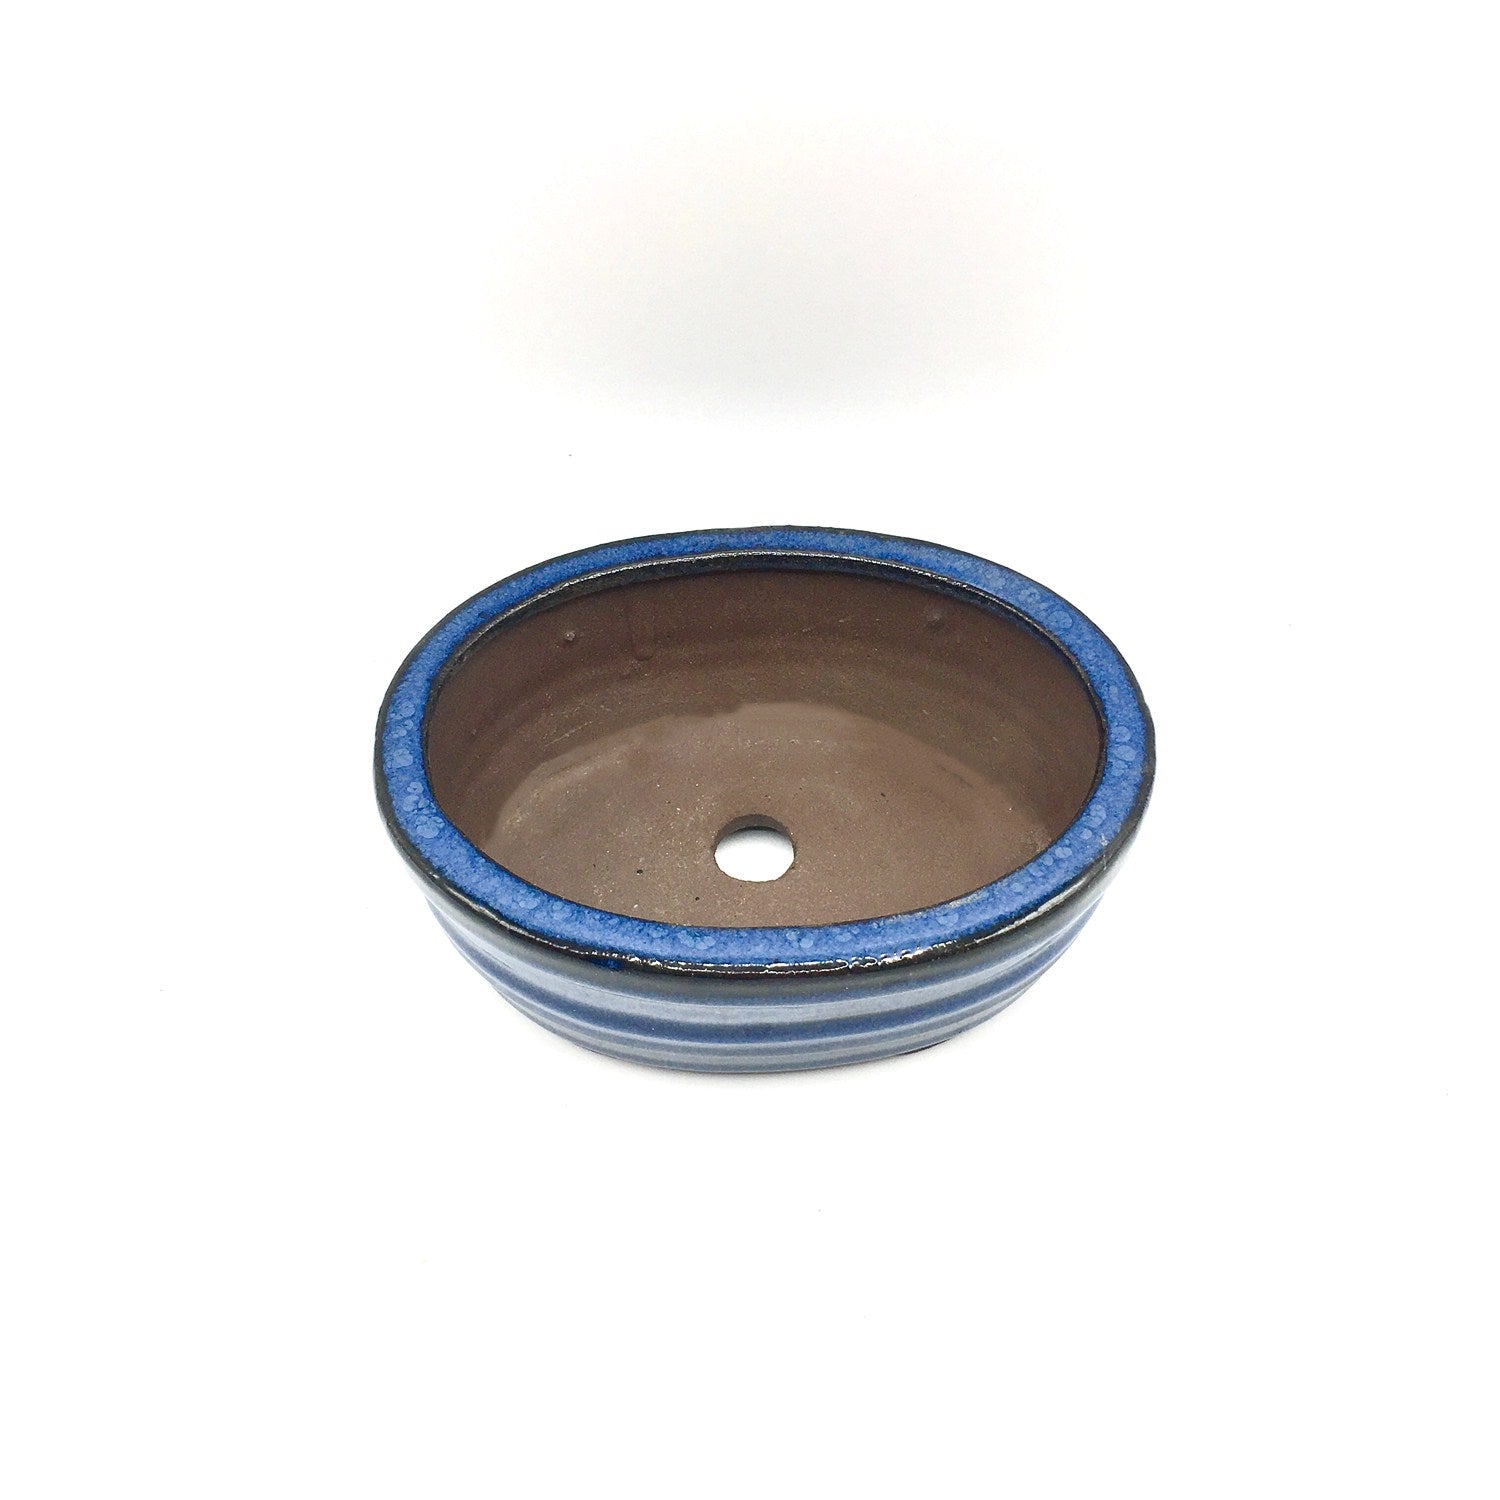 6''Bonsai Pot | Ceramic Container for Bonsai trees, Succulents